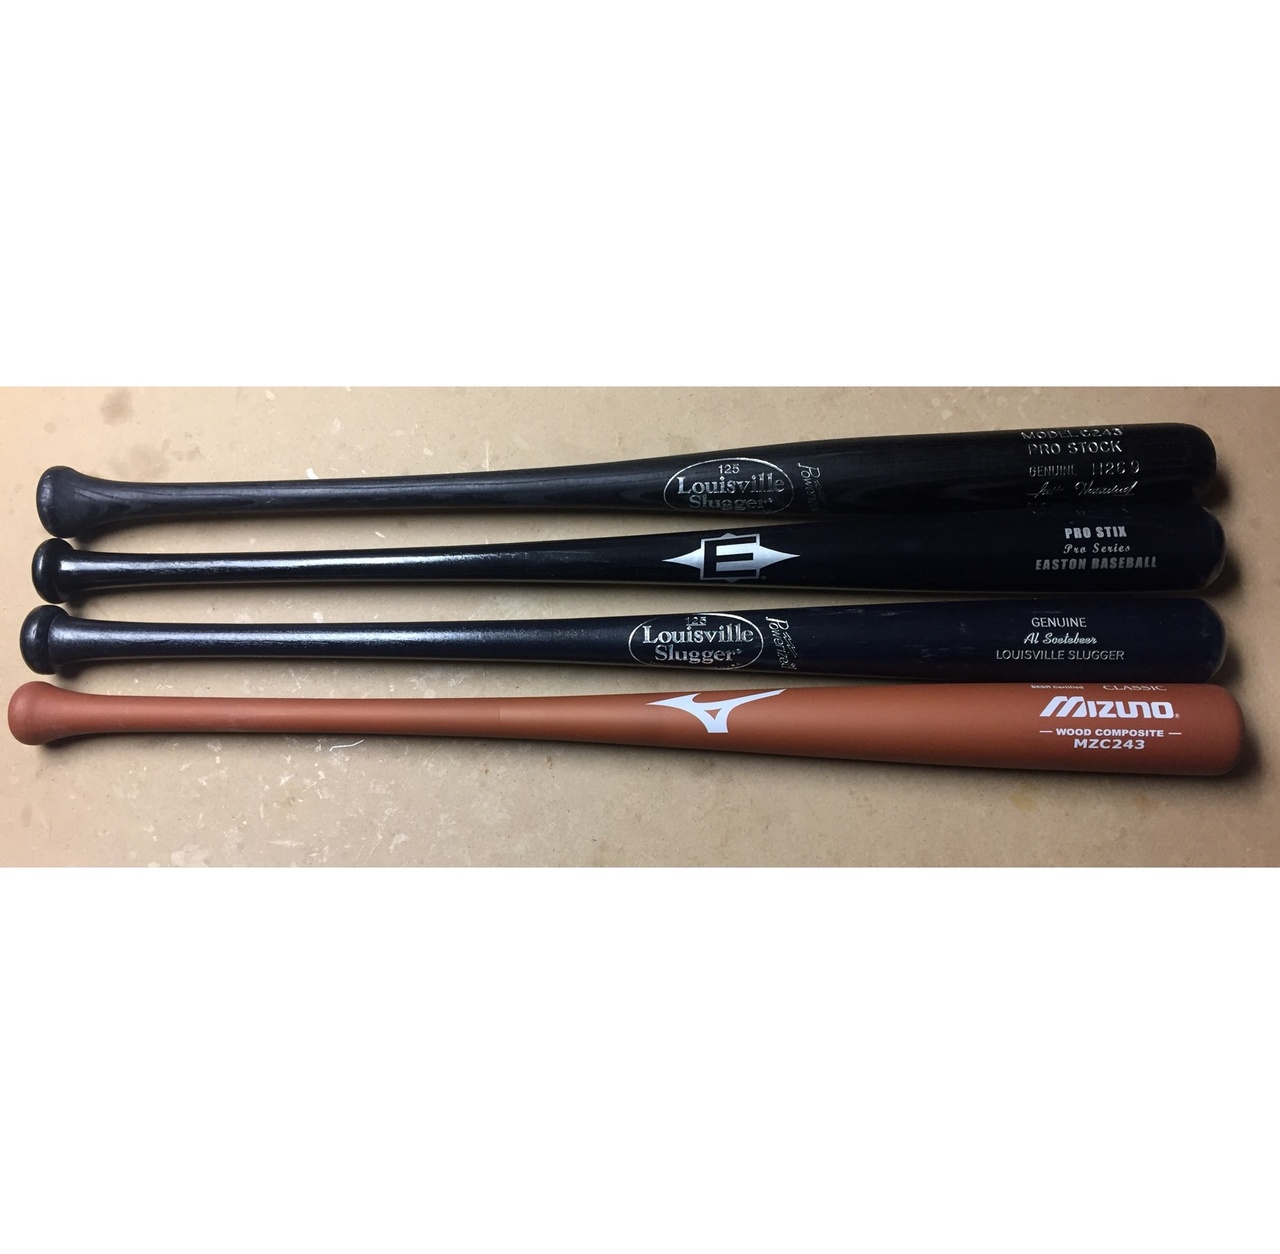 louisville-slugger-bat-pack-wood-bats-34-inch-4-total BATPACK-0002 Louisville  <p>Mizuno composite Easton Pro Stix and Louisville Slugger wood bats in